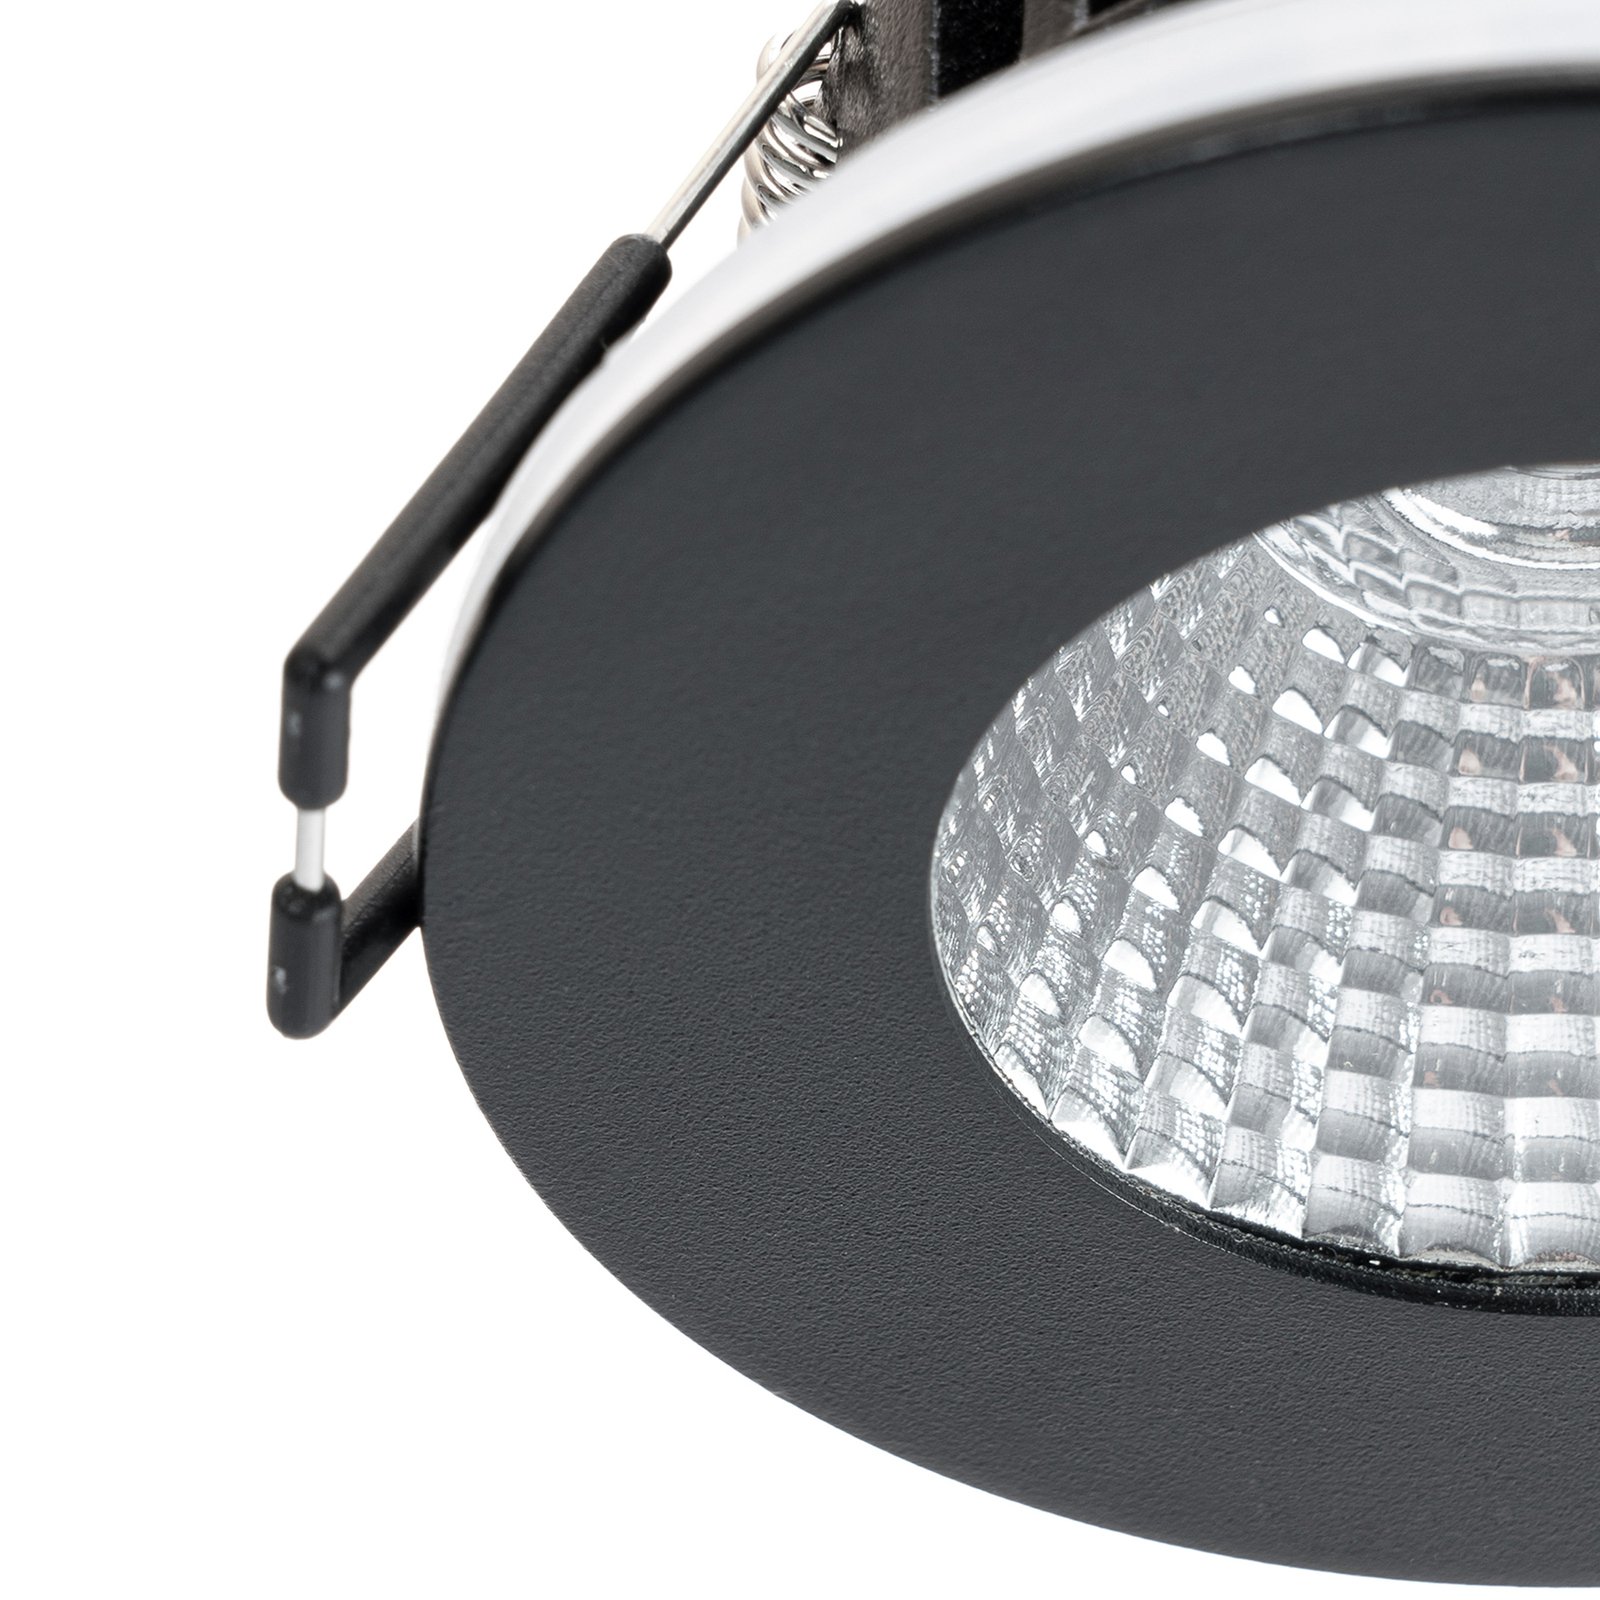 Arcchio LED-Downlight Lirin, schwarz, 4.000K